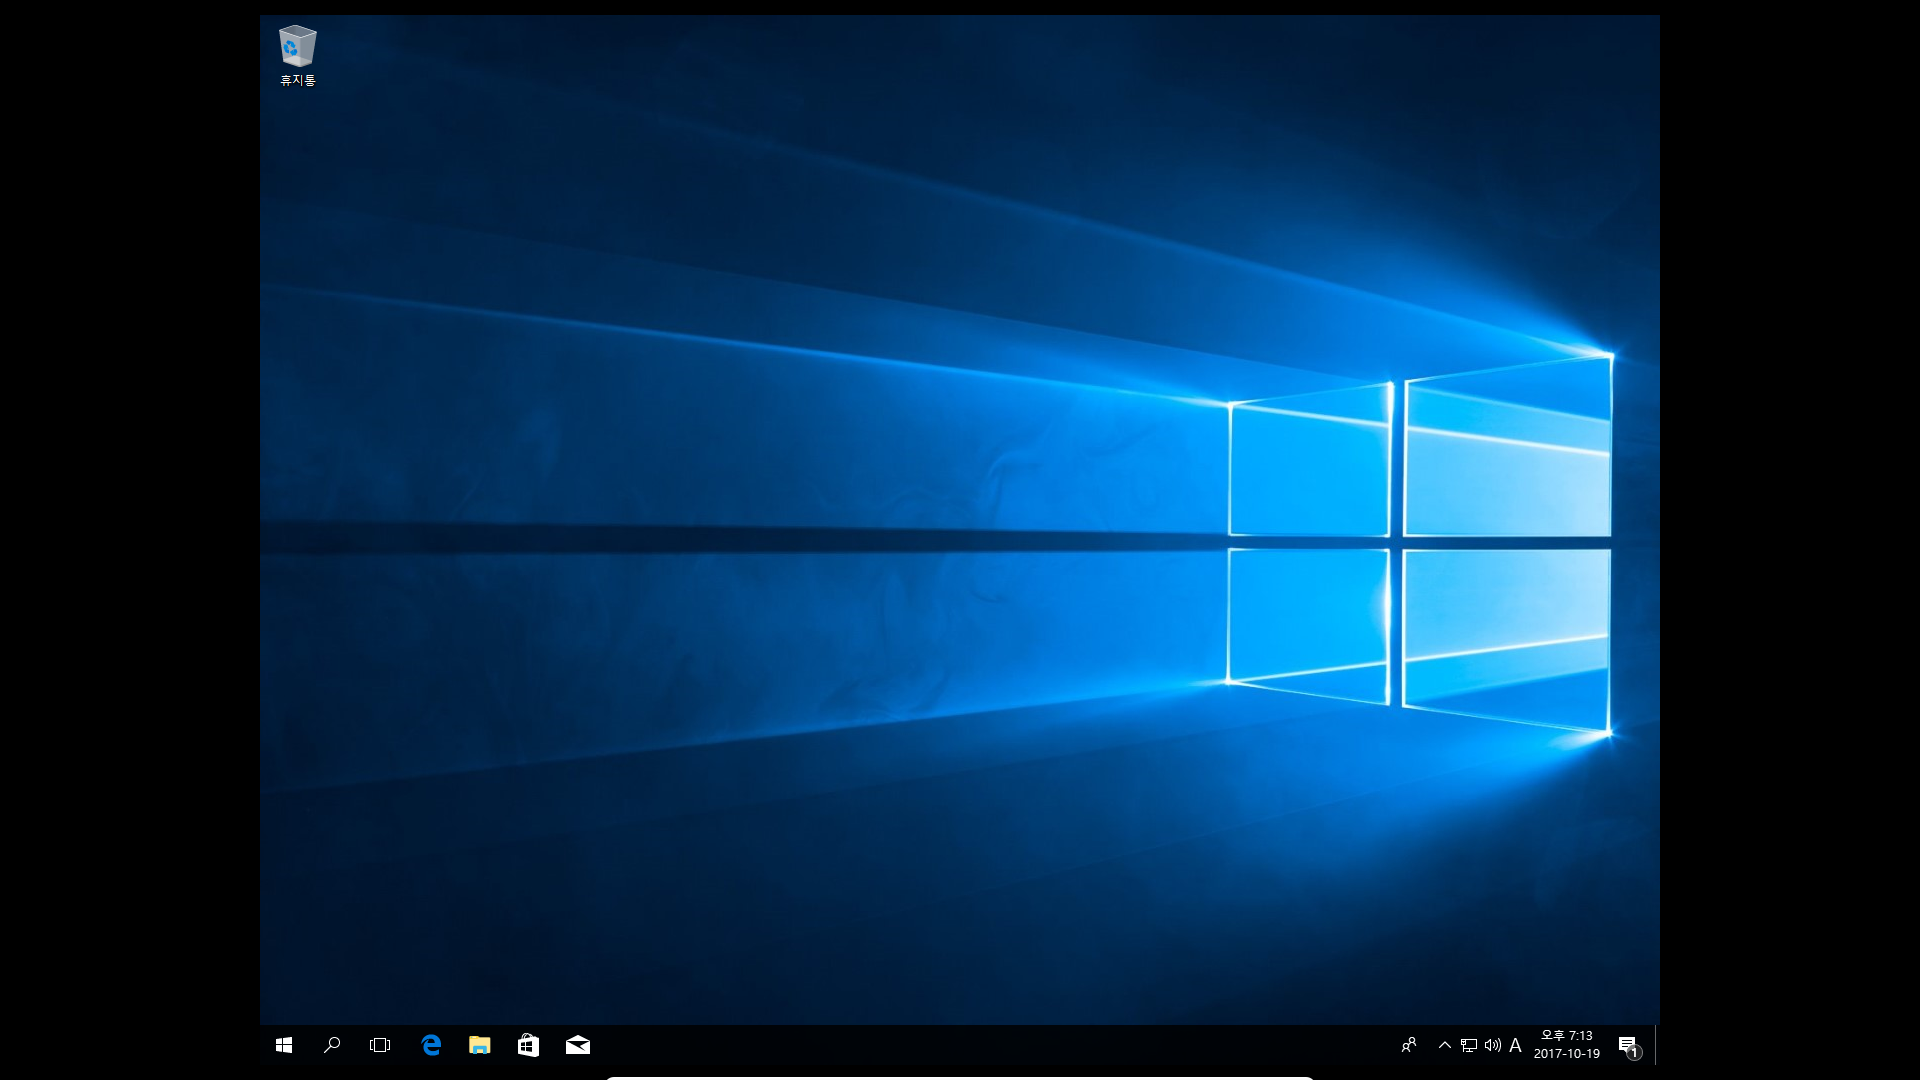 Windows 10 버전1709 엔터프라이즈로 업그레이드 테스트 - 버전1703 에서 - ISO 더블클릭 또는 엔터로 탑재 후에 setup.exe 실행으로 업그레이드-잠시 다른 거 하는 사이에 업그레이드 다 된 듯 하네요 2017-10-19_191344.png